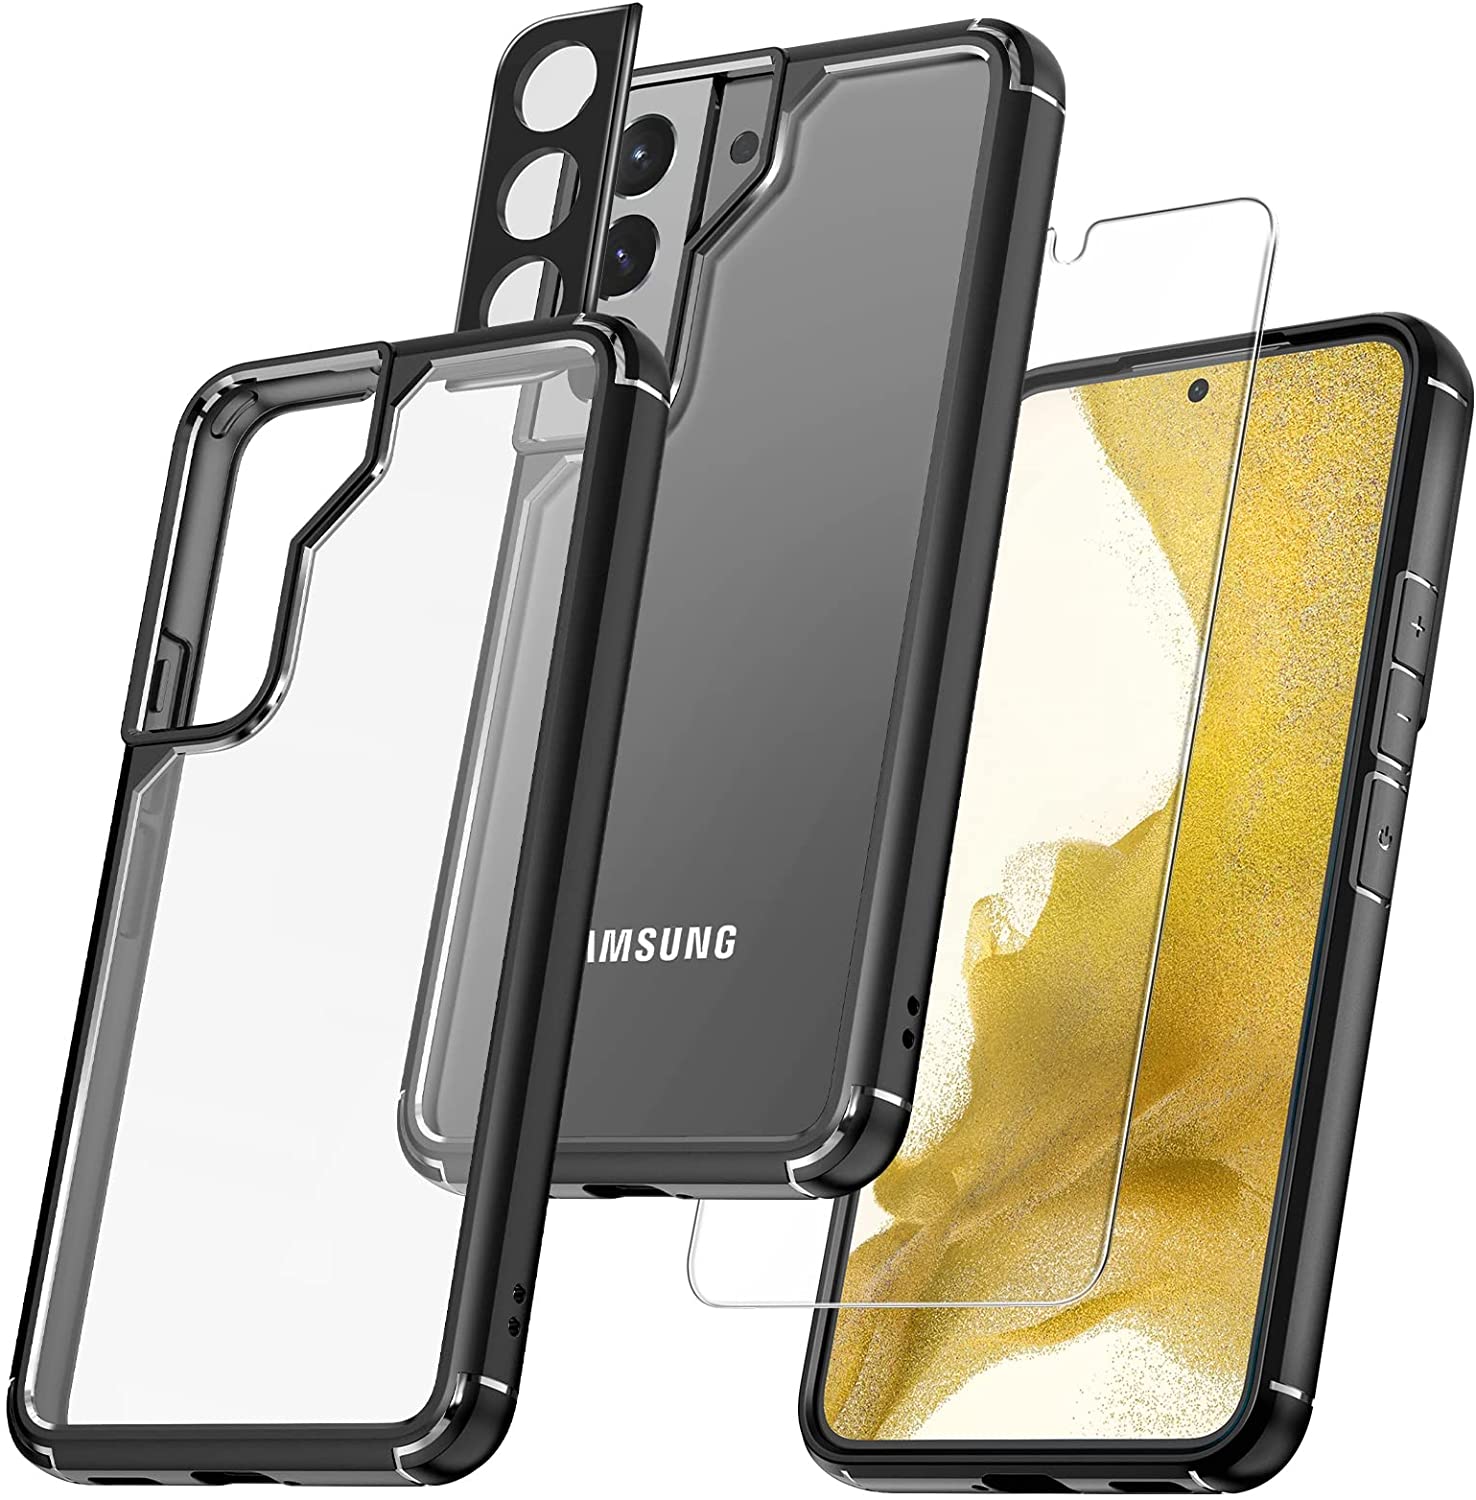 TAURI 4 Pièces Protection écran Compatible avec Samsung Galaxy S22 Ultra 5G  6.8, 2 Pièces TPU Protection écran et 2 Pièces Caméra Arrière,Compatible